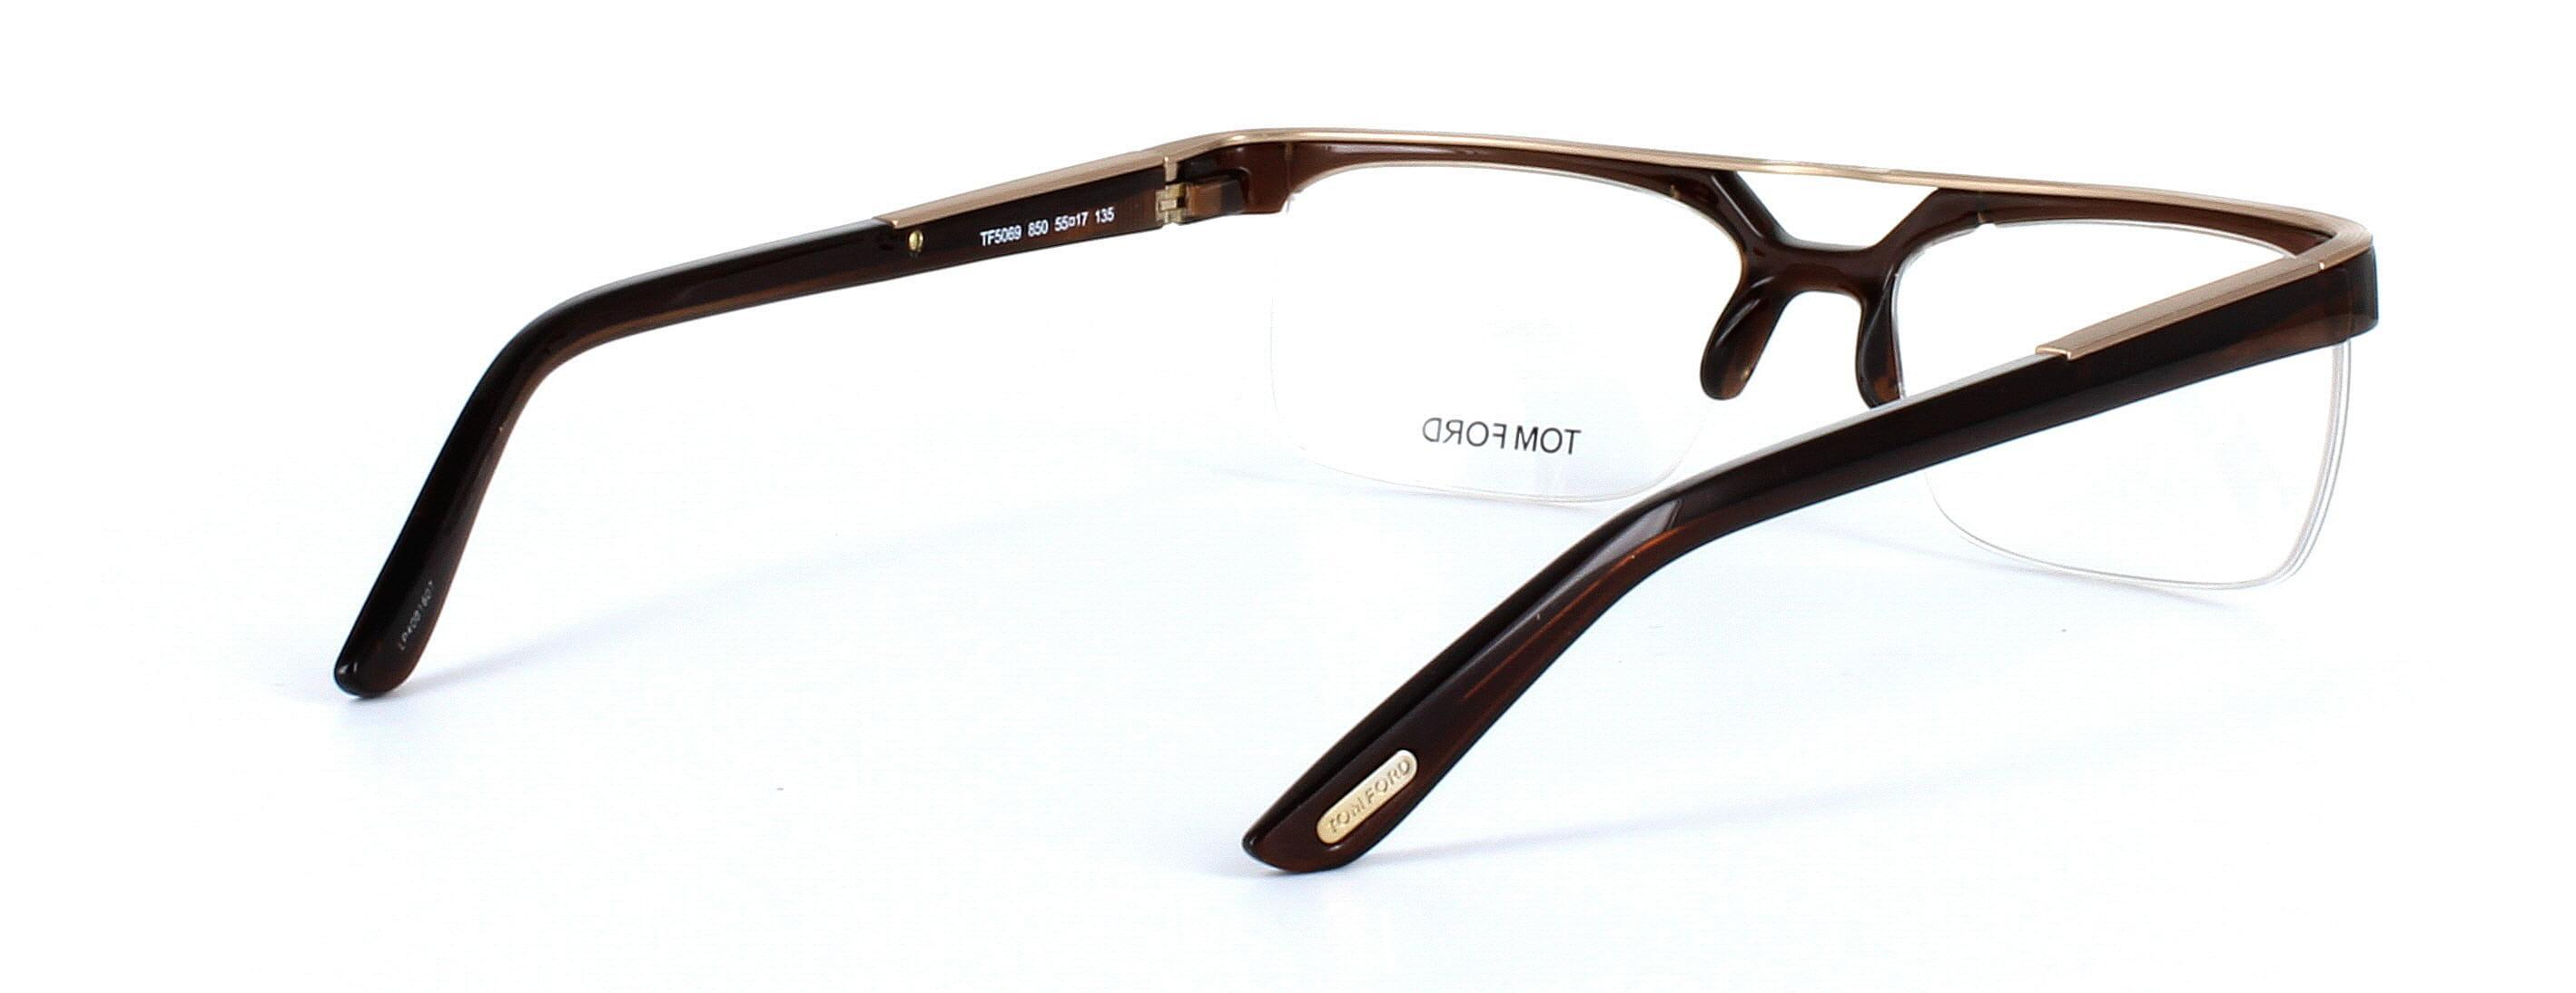 Tom Ford - 5069 - Unisex semi-rimless glasses - image 4